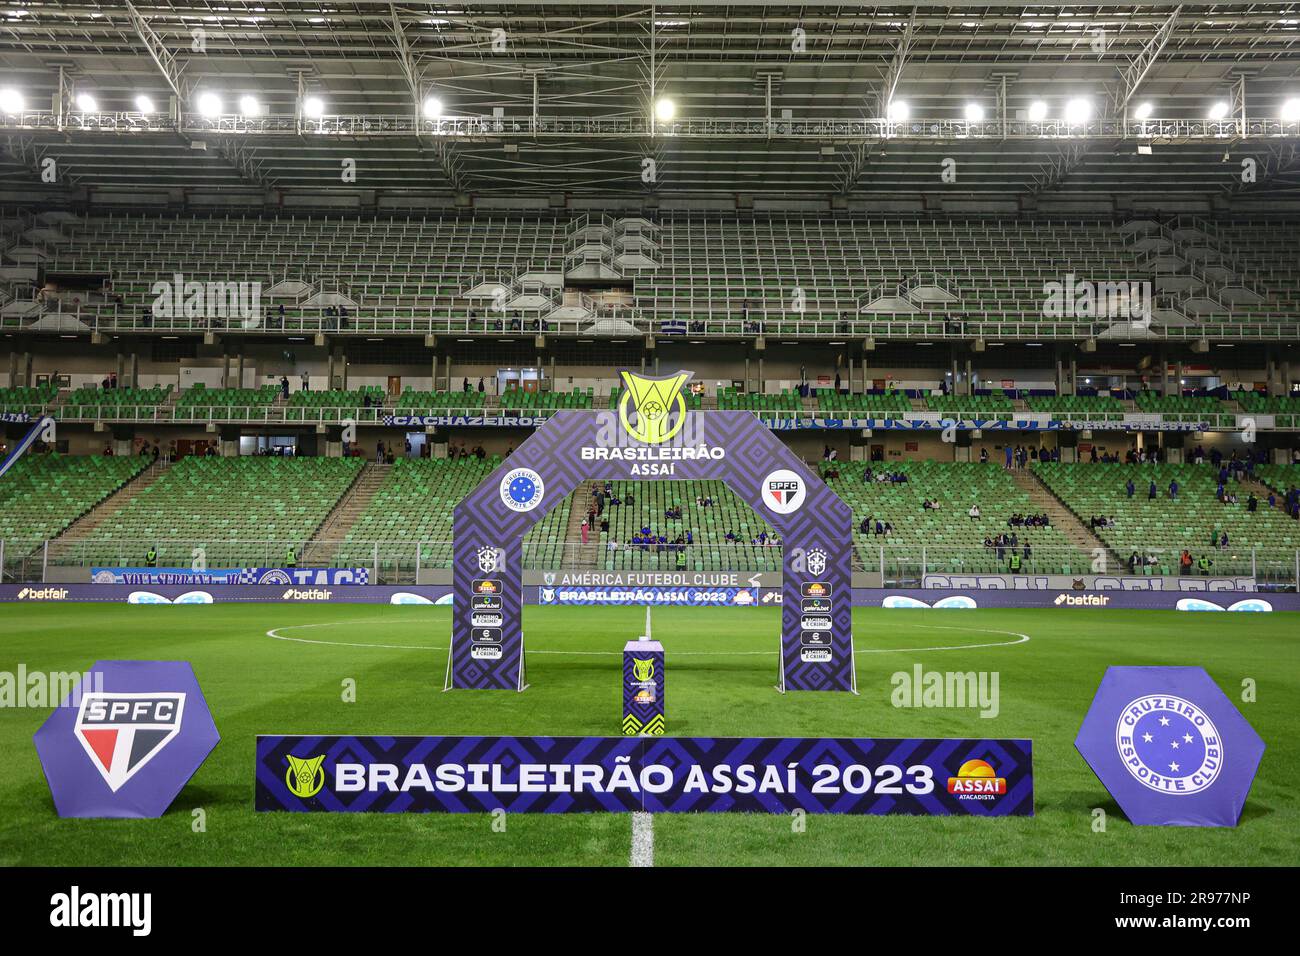 Clube Palmeiras - Belo Horizonte/MG